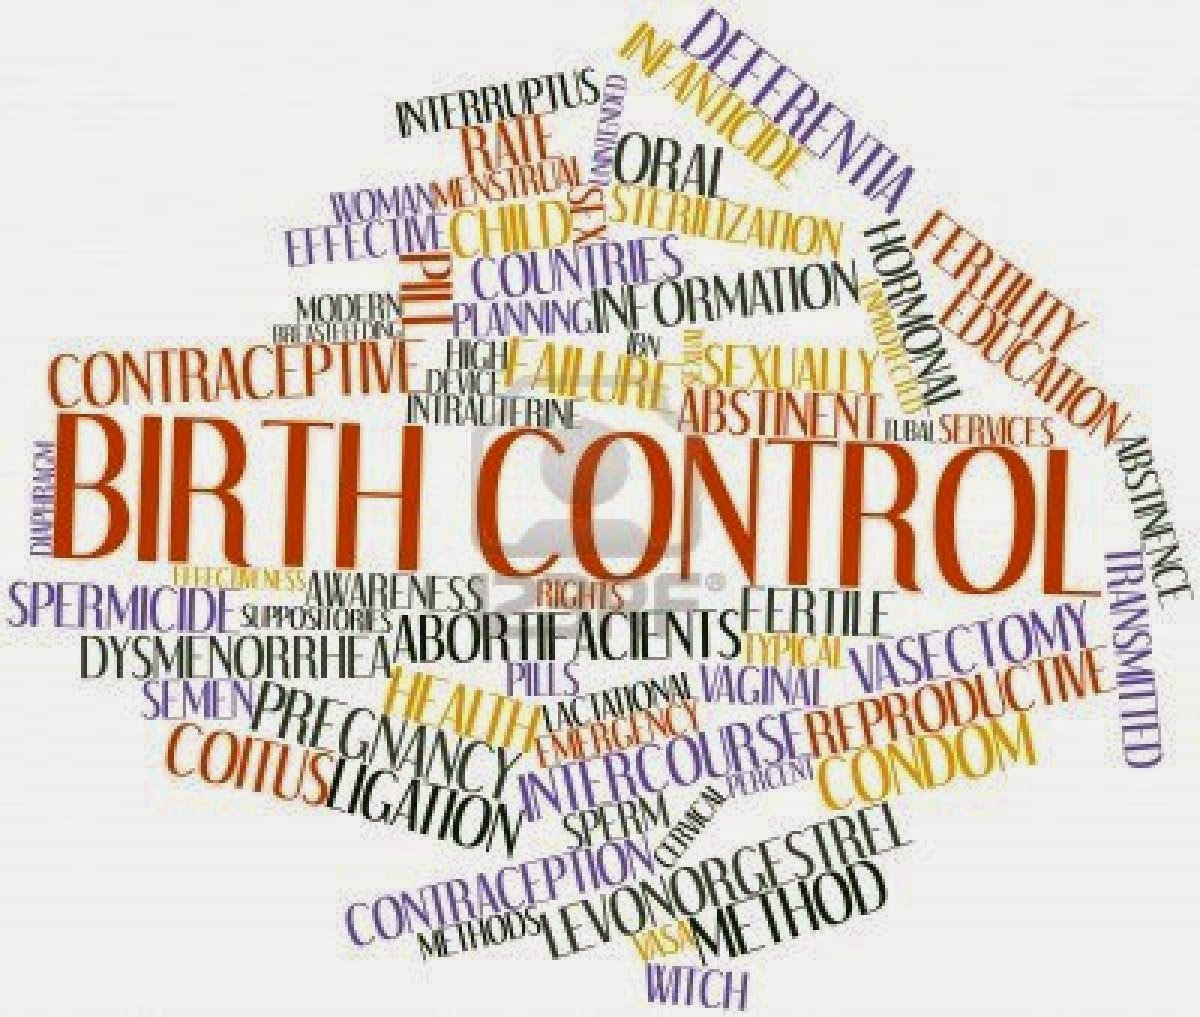 Pro birth control essay